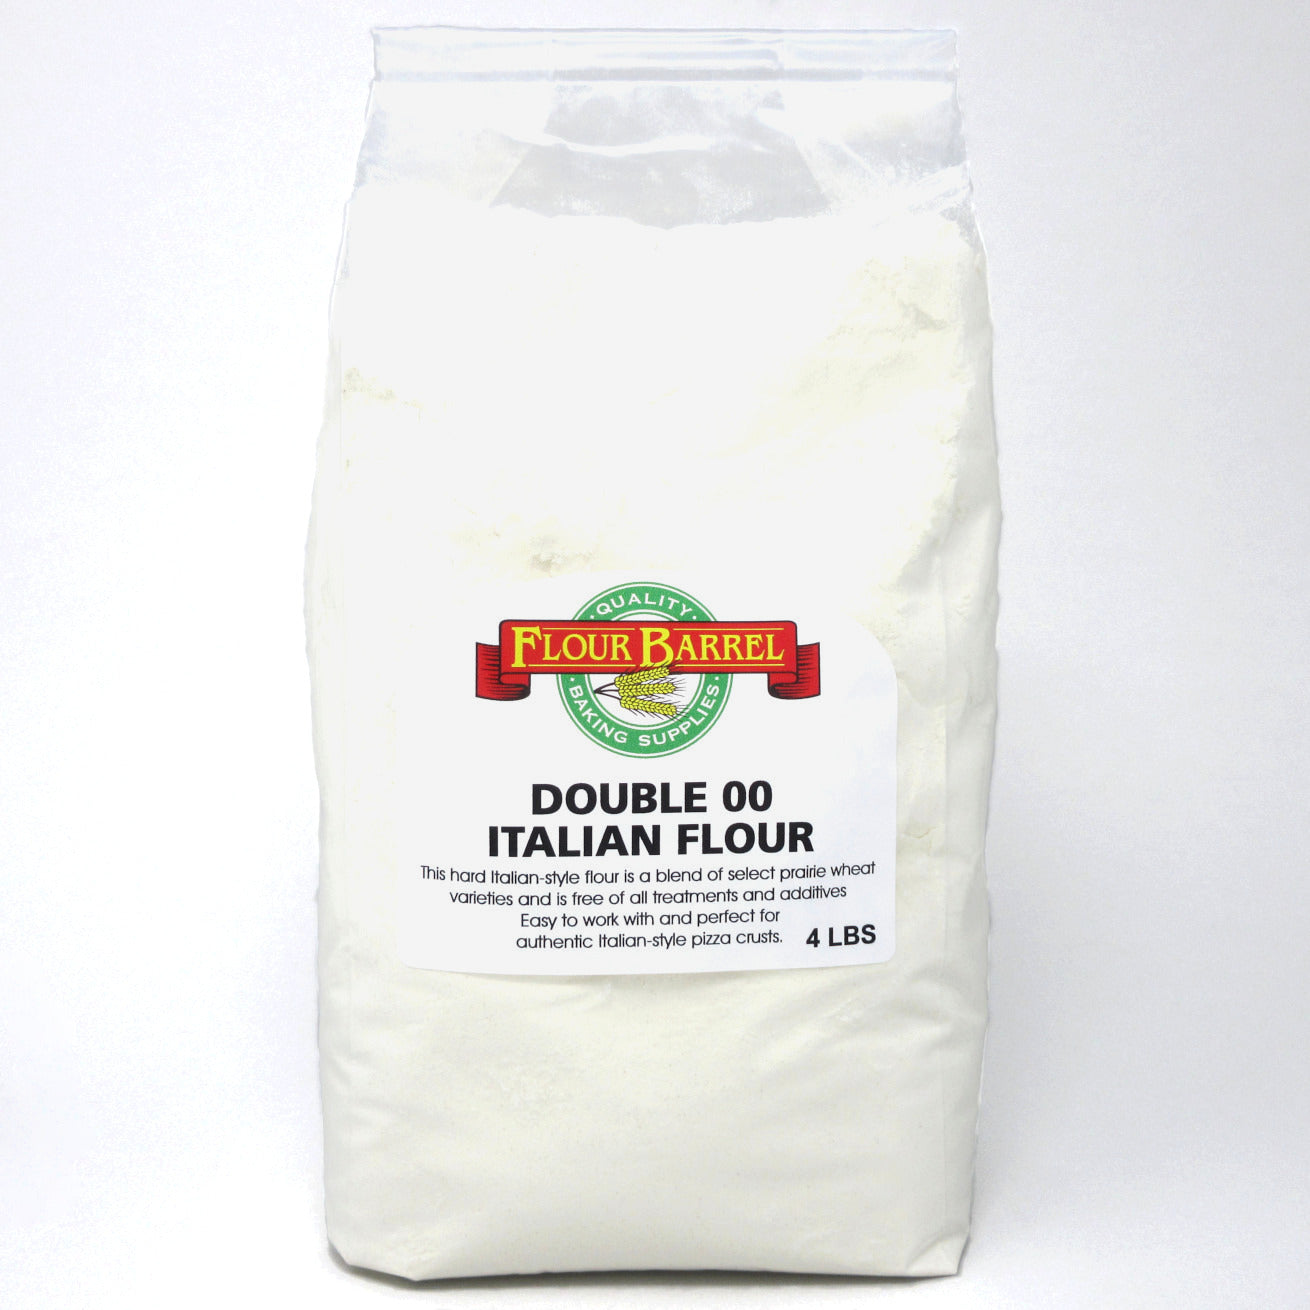 Flour Barrel product image - Double 00 Italian Flour